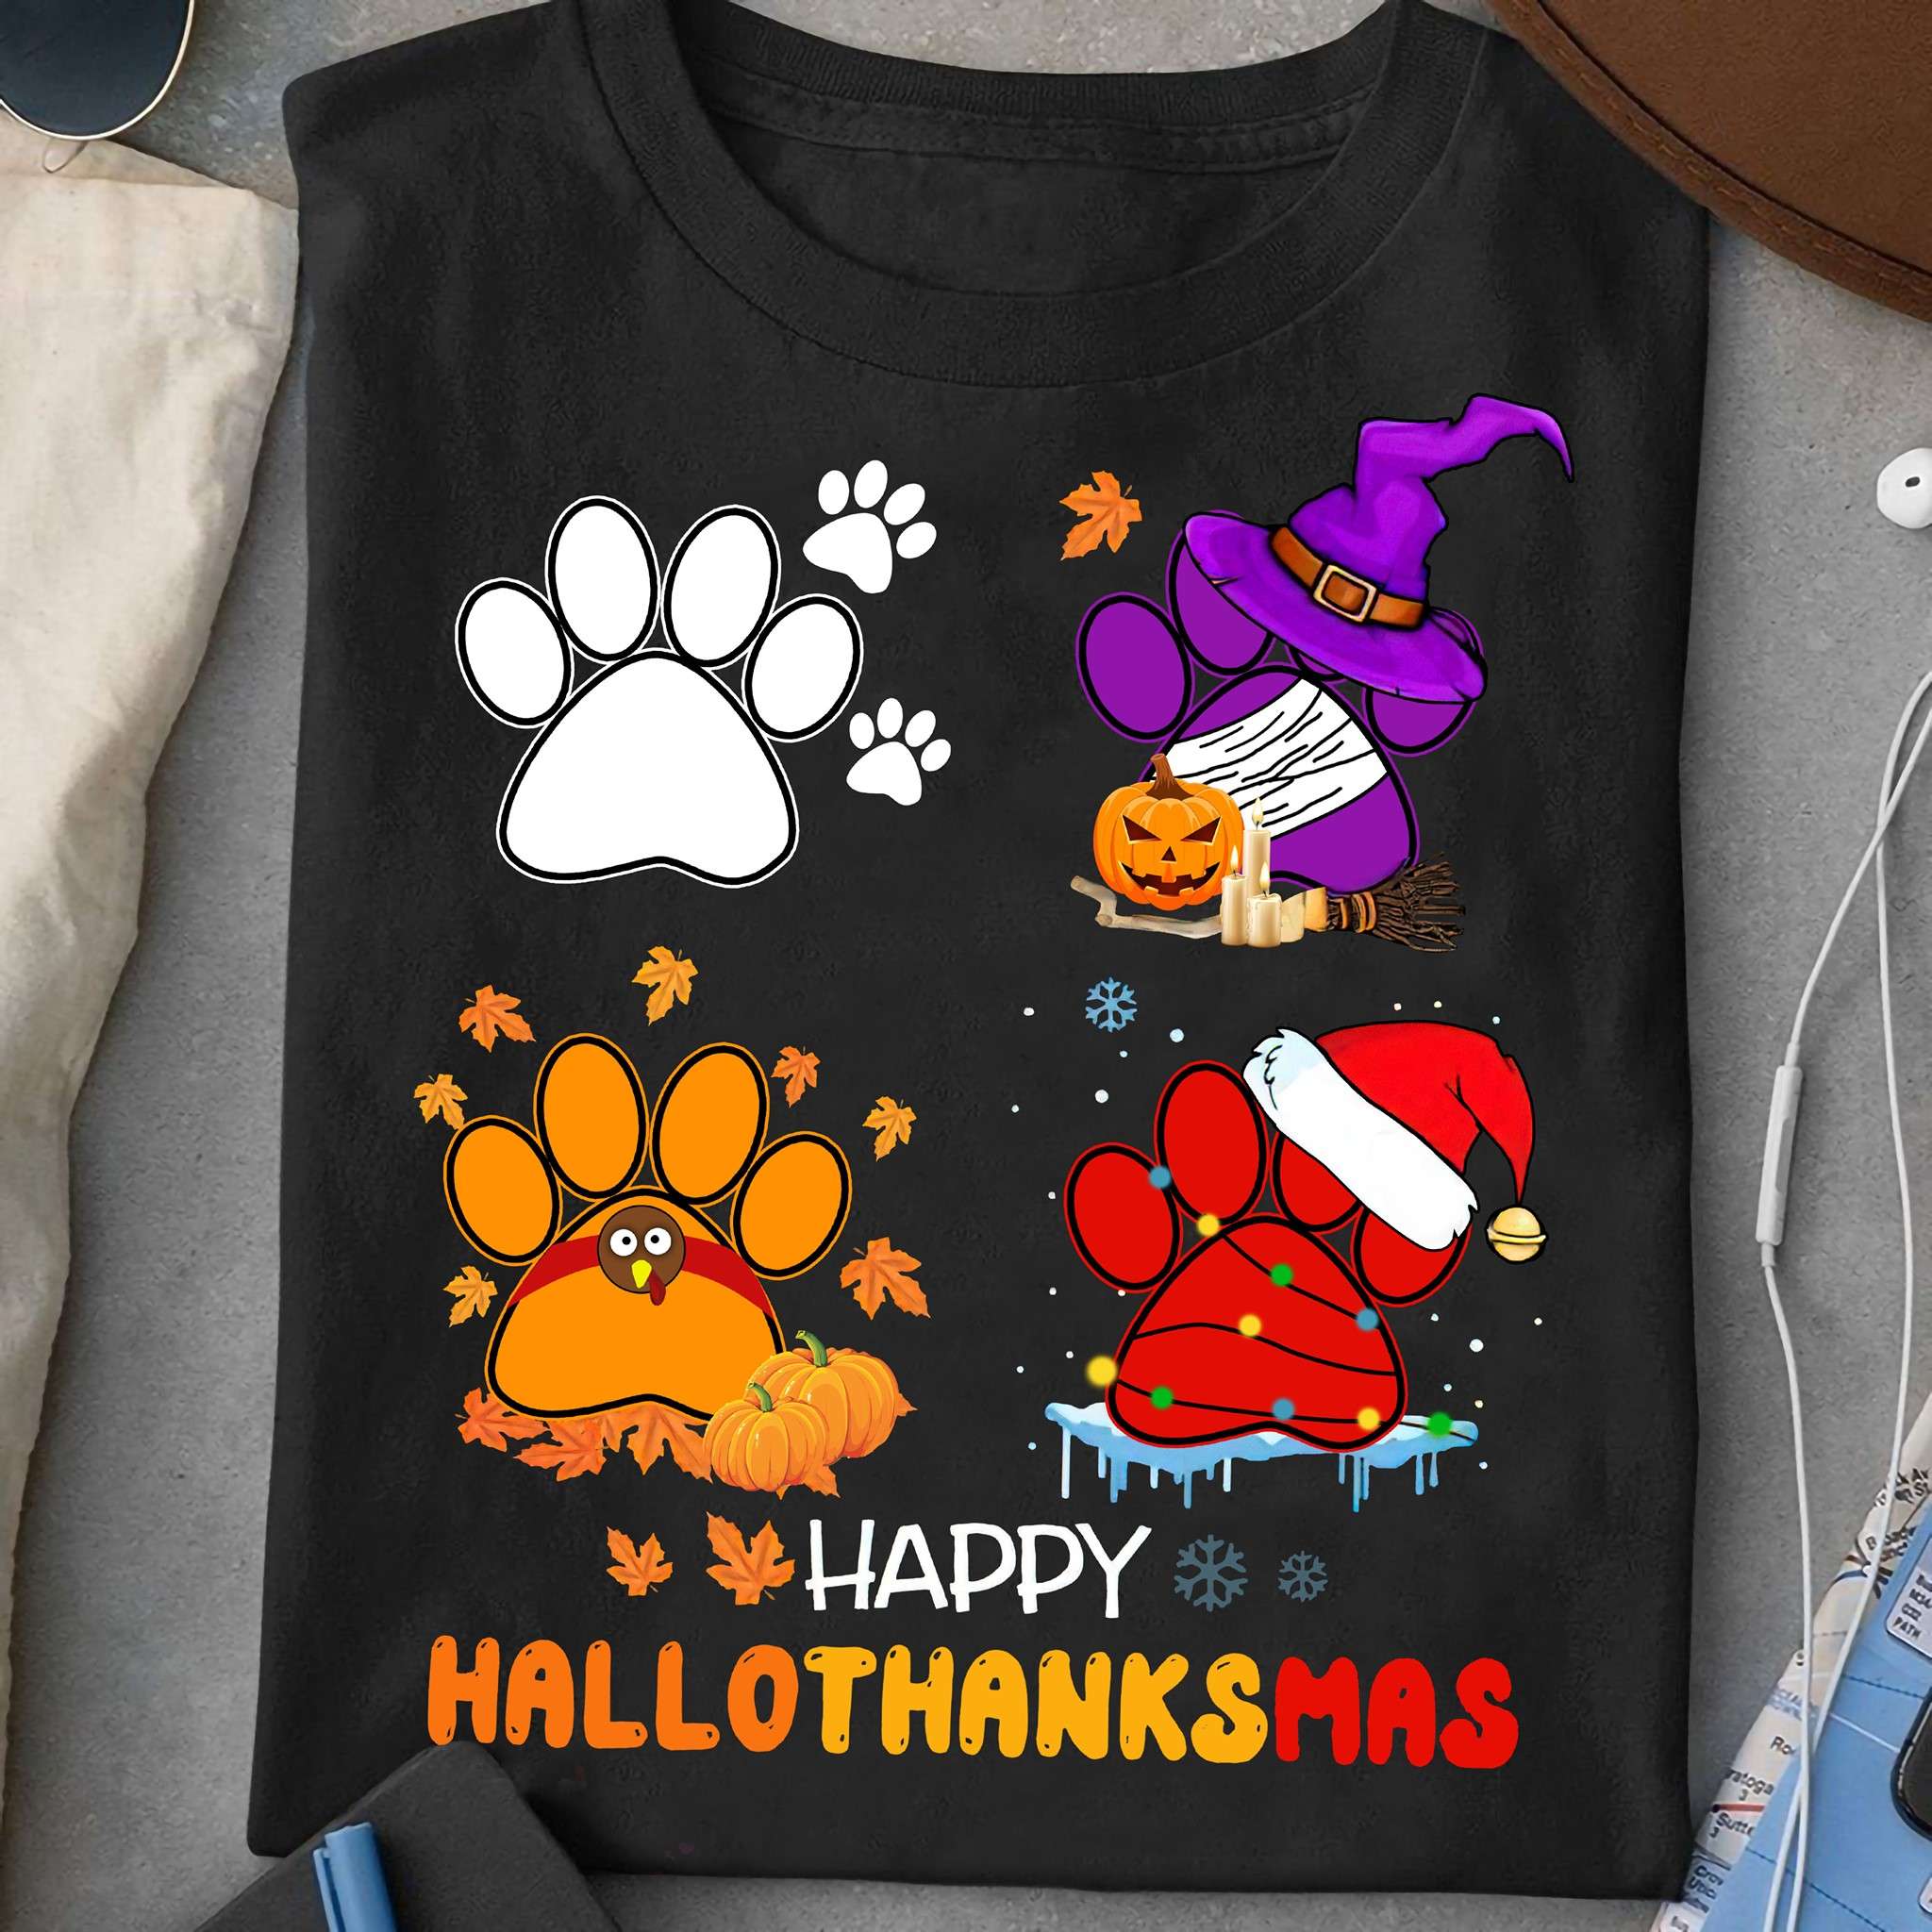 Dog Footprint Halloween And Merry Chritsmas - Happy Hallothanksmas